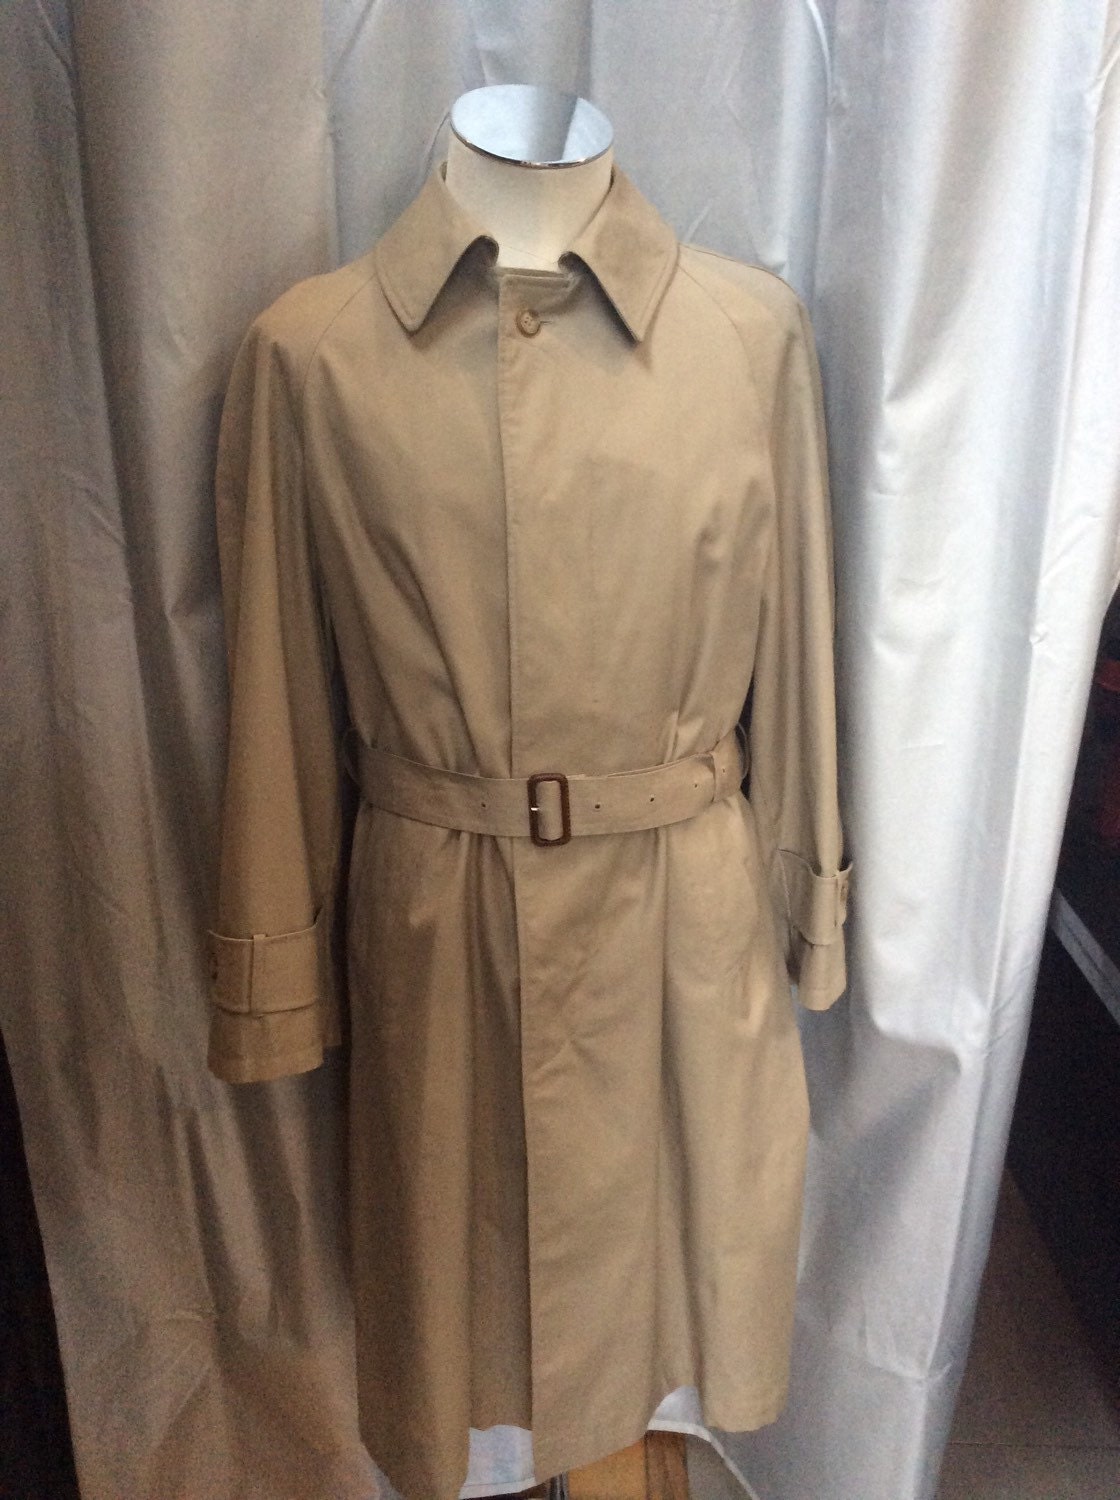 Coxmoore raincoat/trench coat